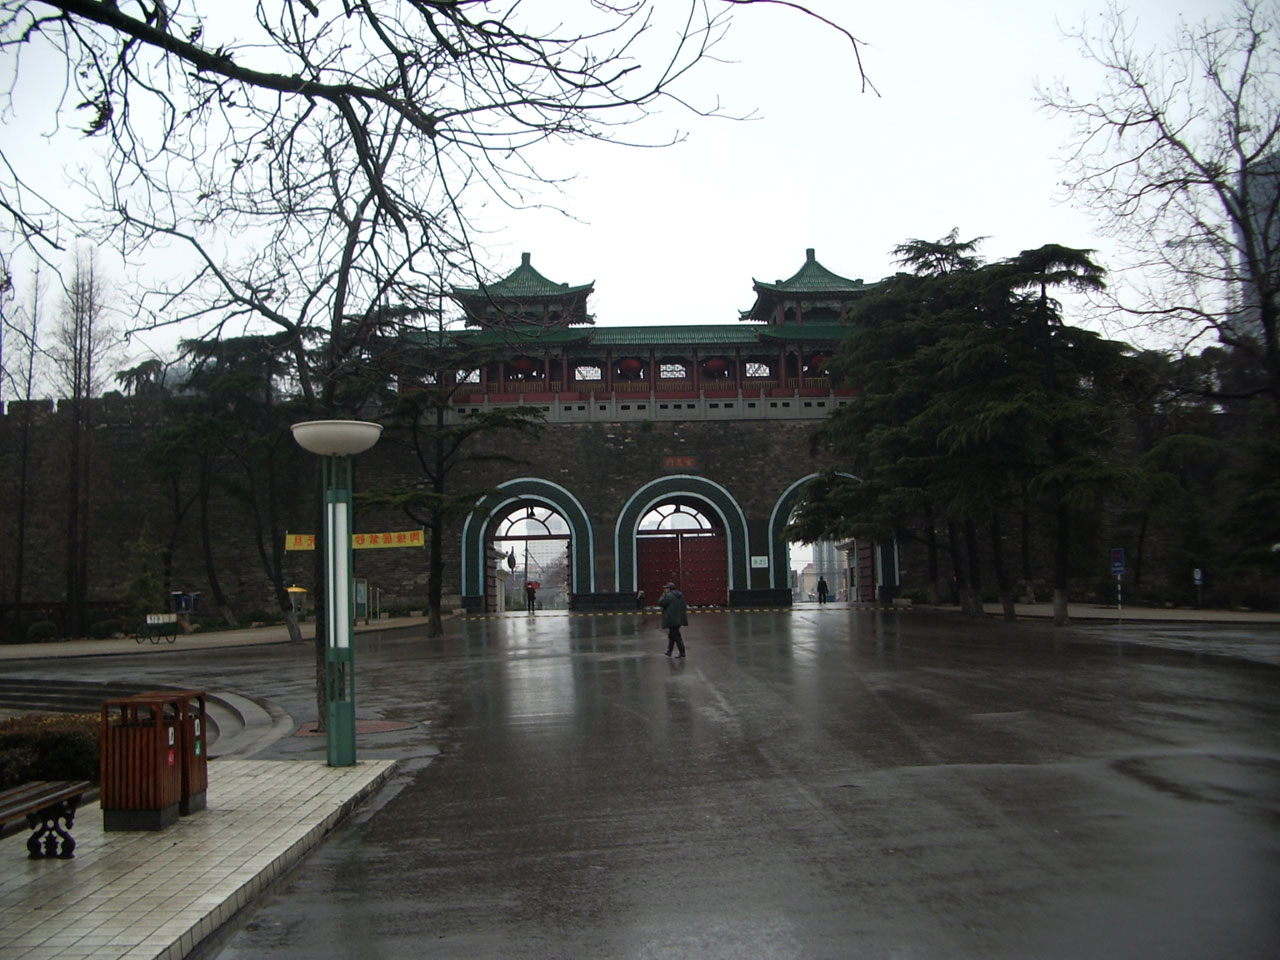 Palace arch